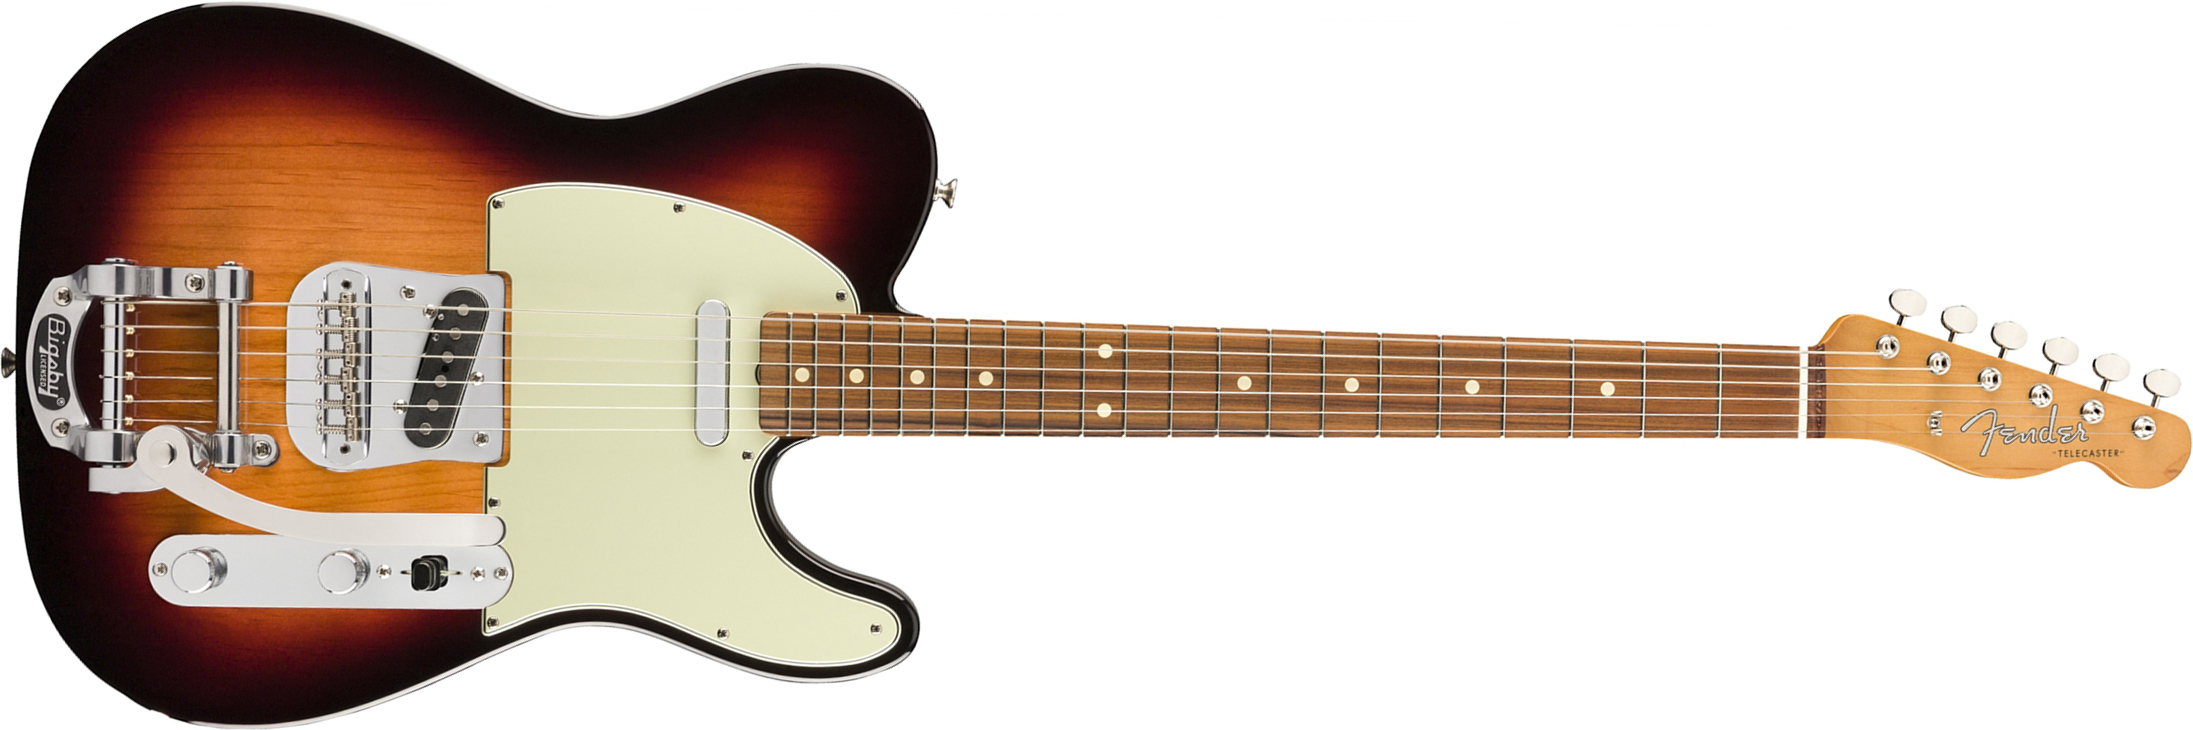 Fender Tele 60s Bigsby Vintera Vintage Mex Pf - 3-color Sunburst - Guitarra eléctrica con forma de tel - Main picture